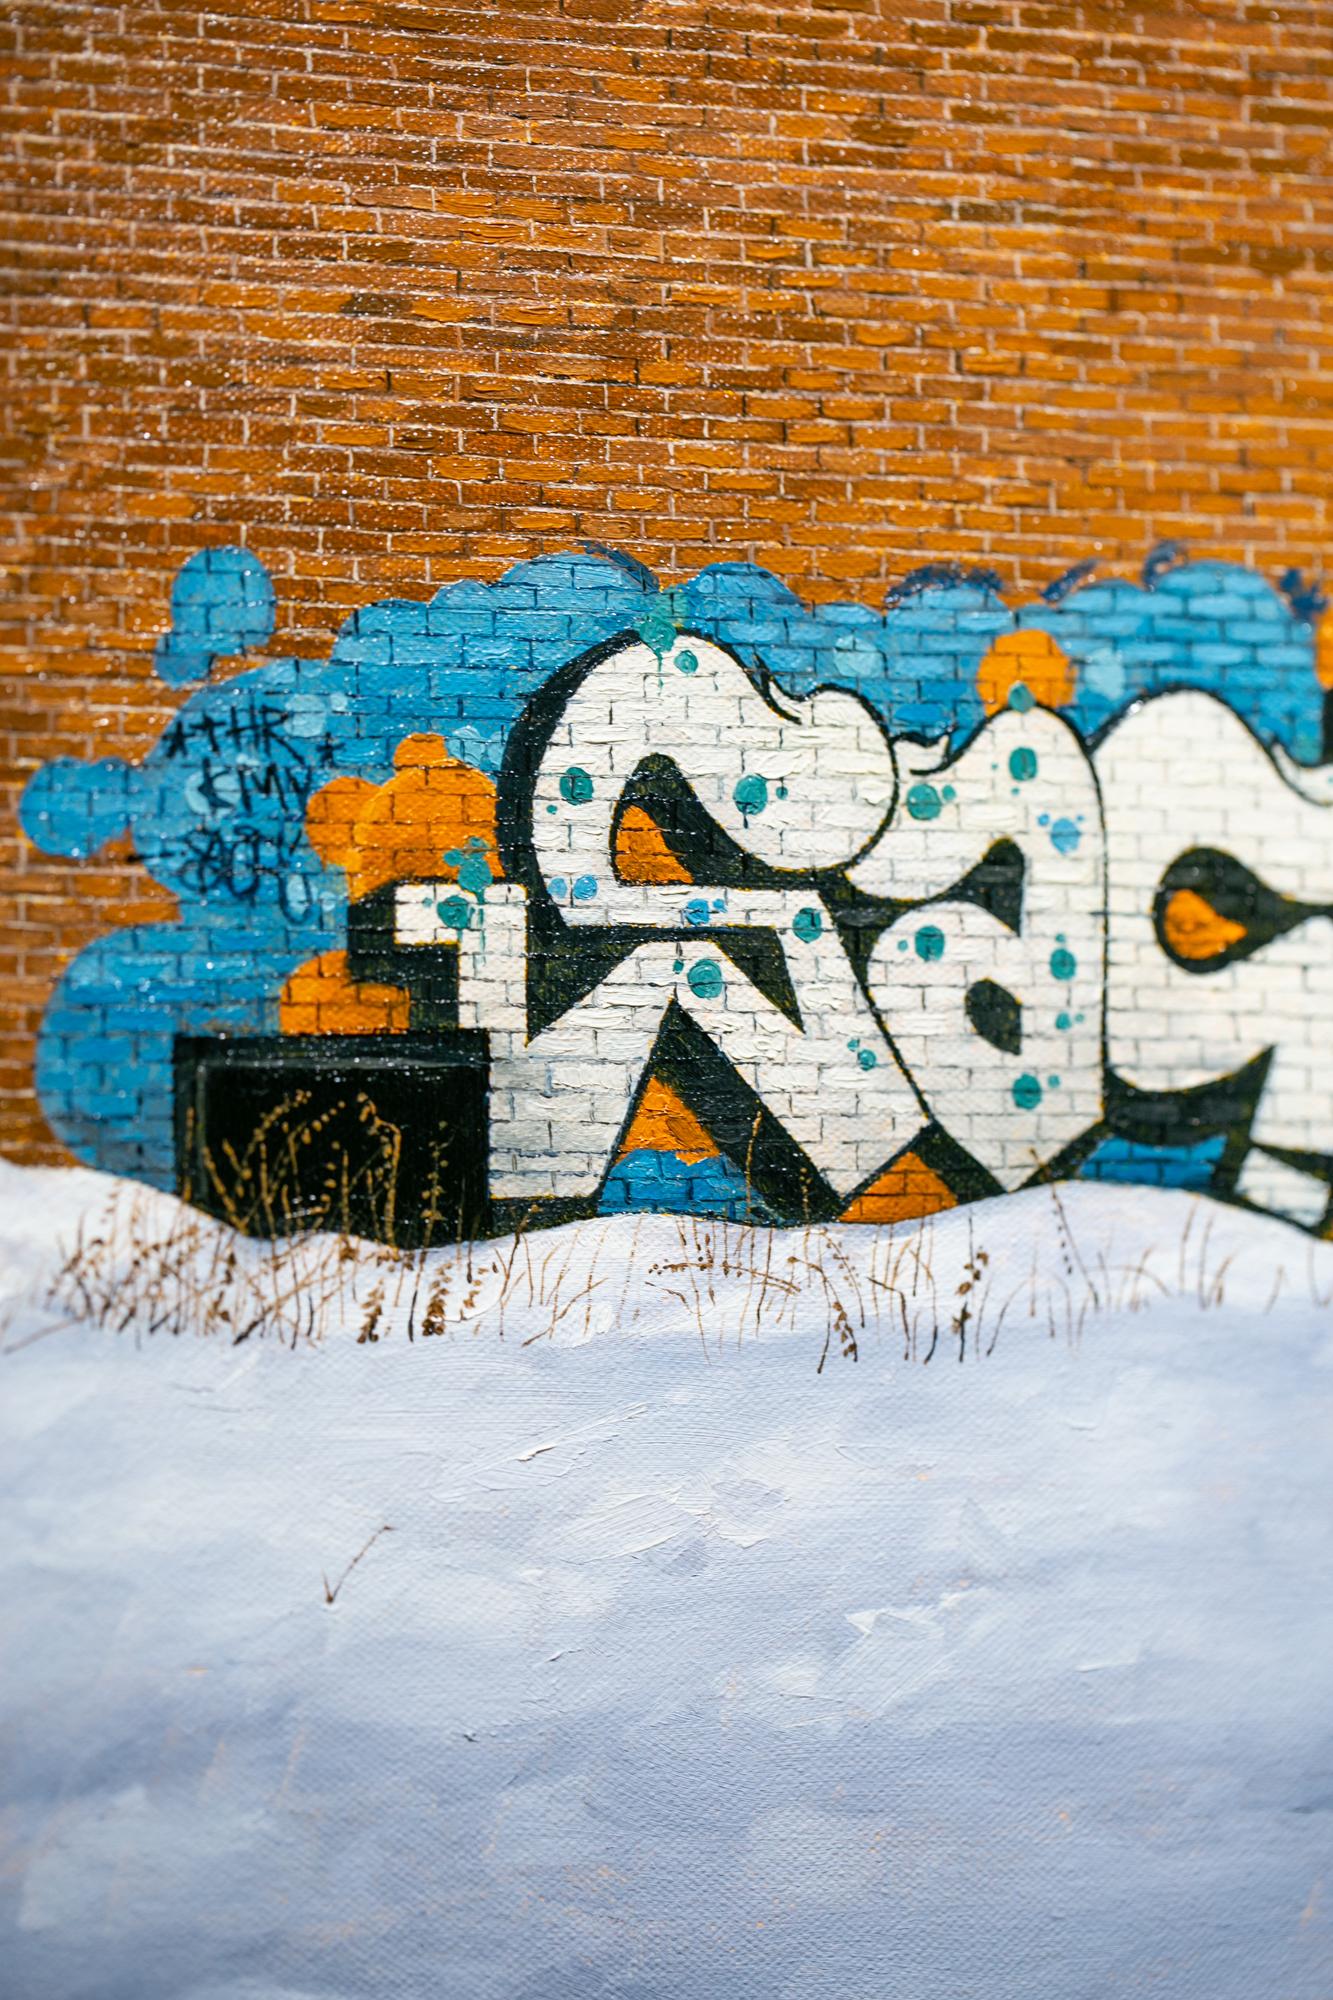 stephanie in graffiti